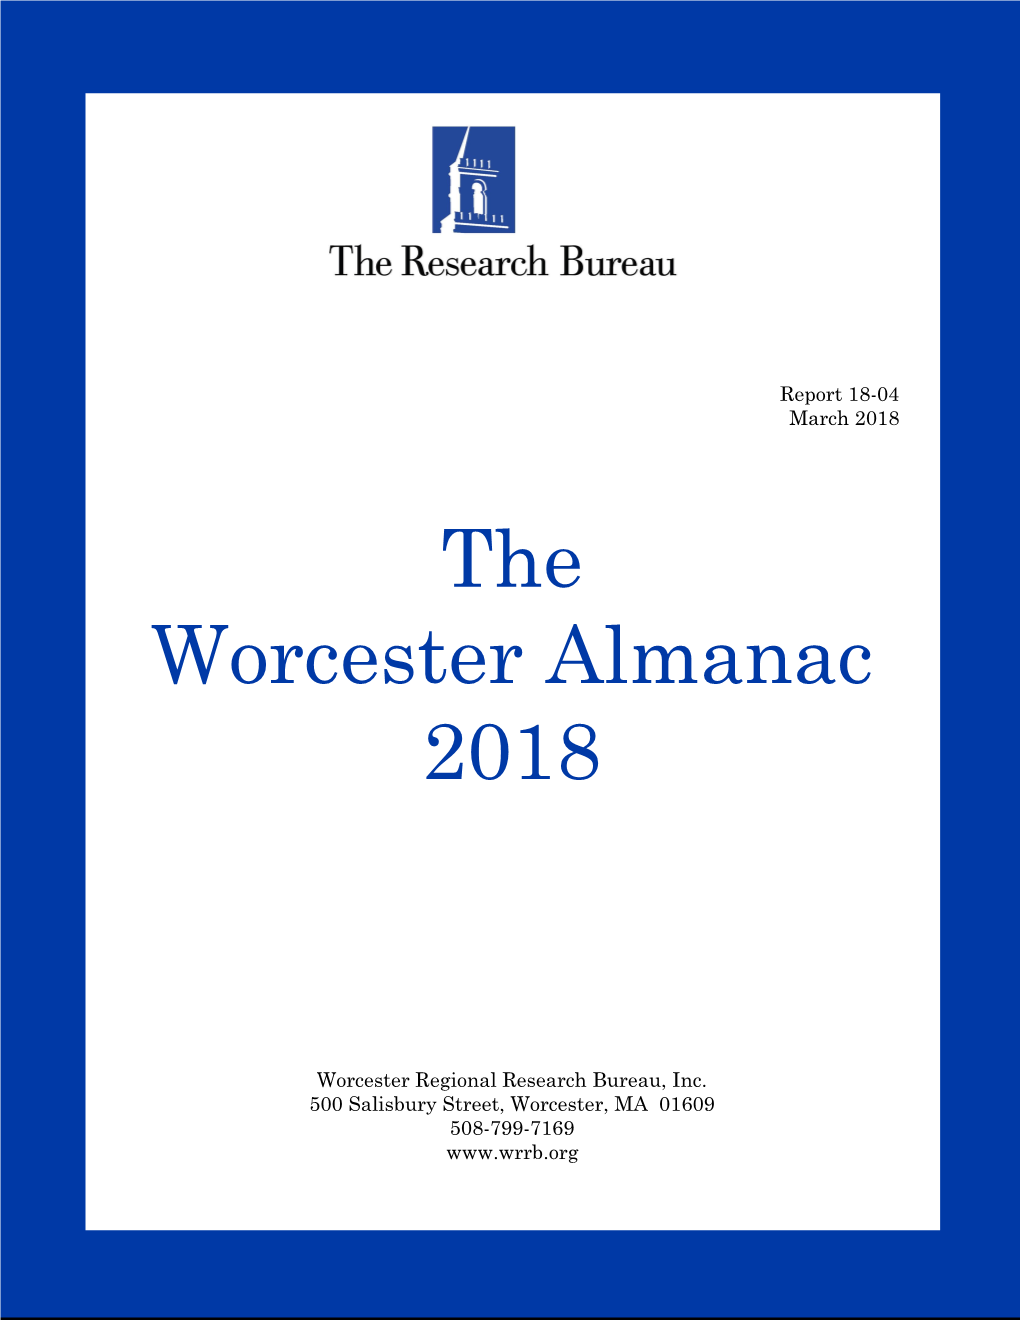 The Worcester Almanac 2018